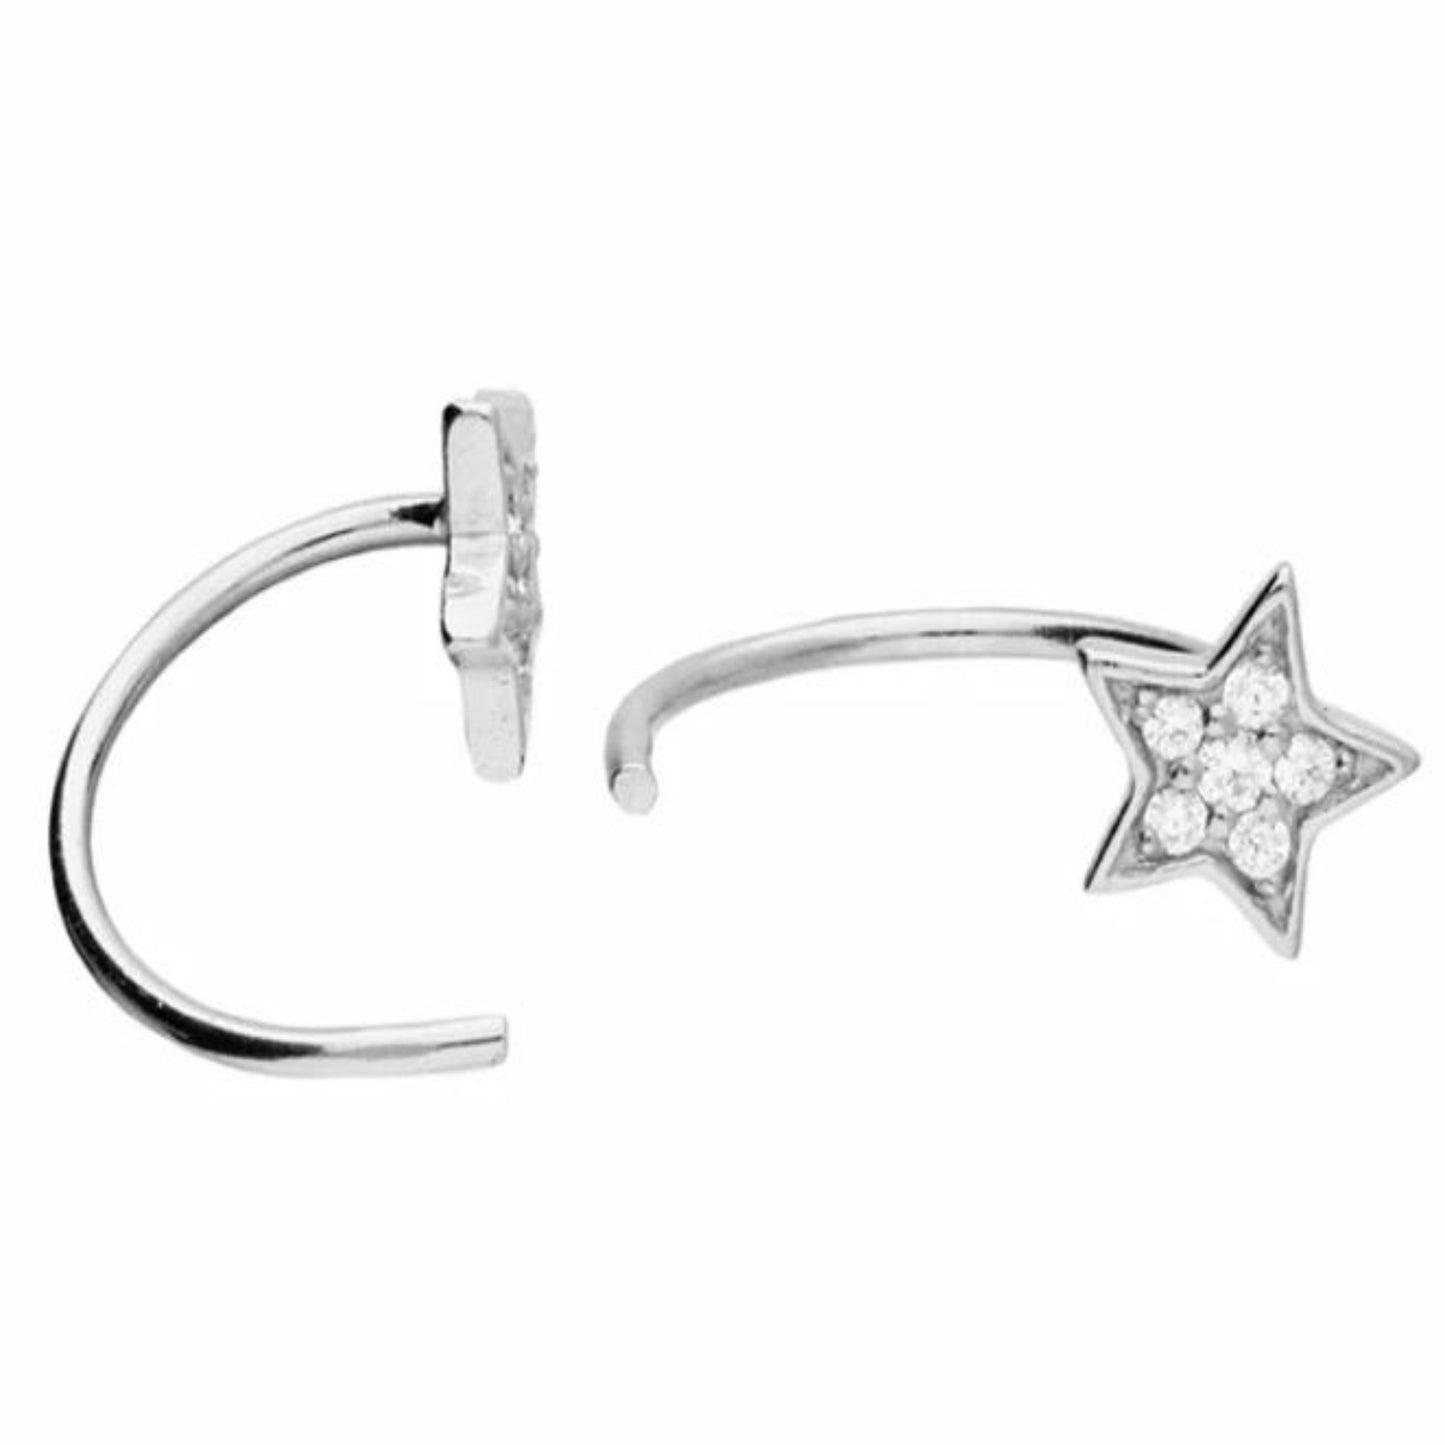 Star Pull-Through Earrings Sterling Silver